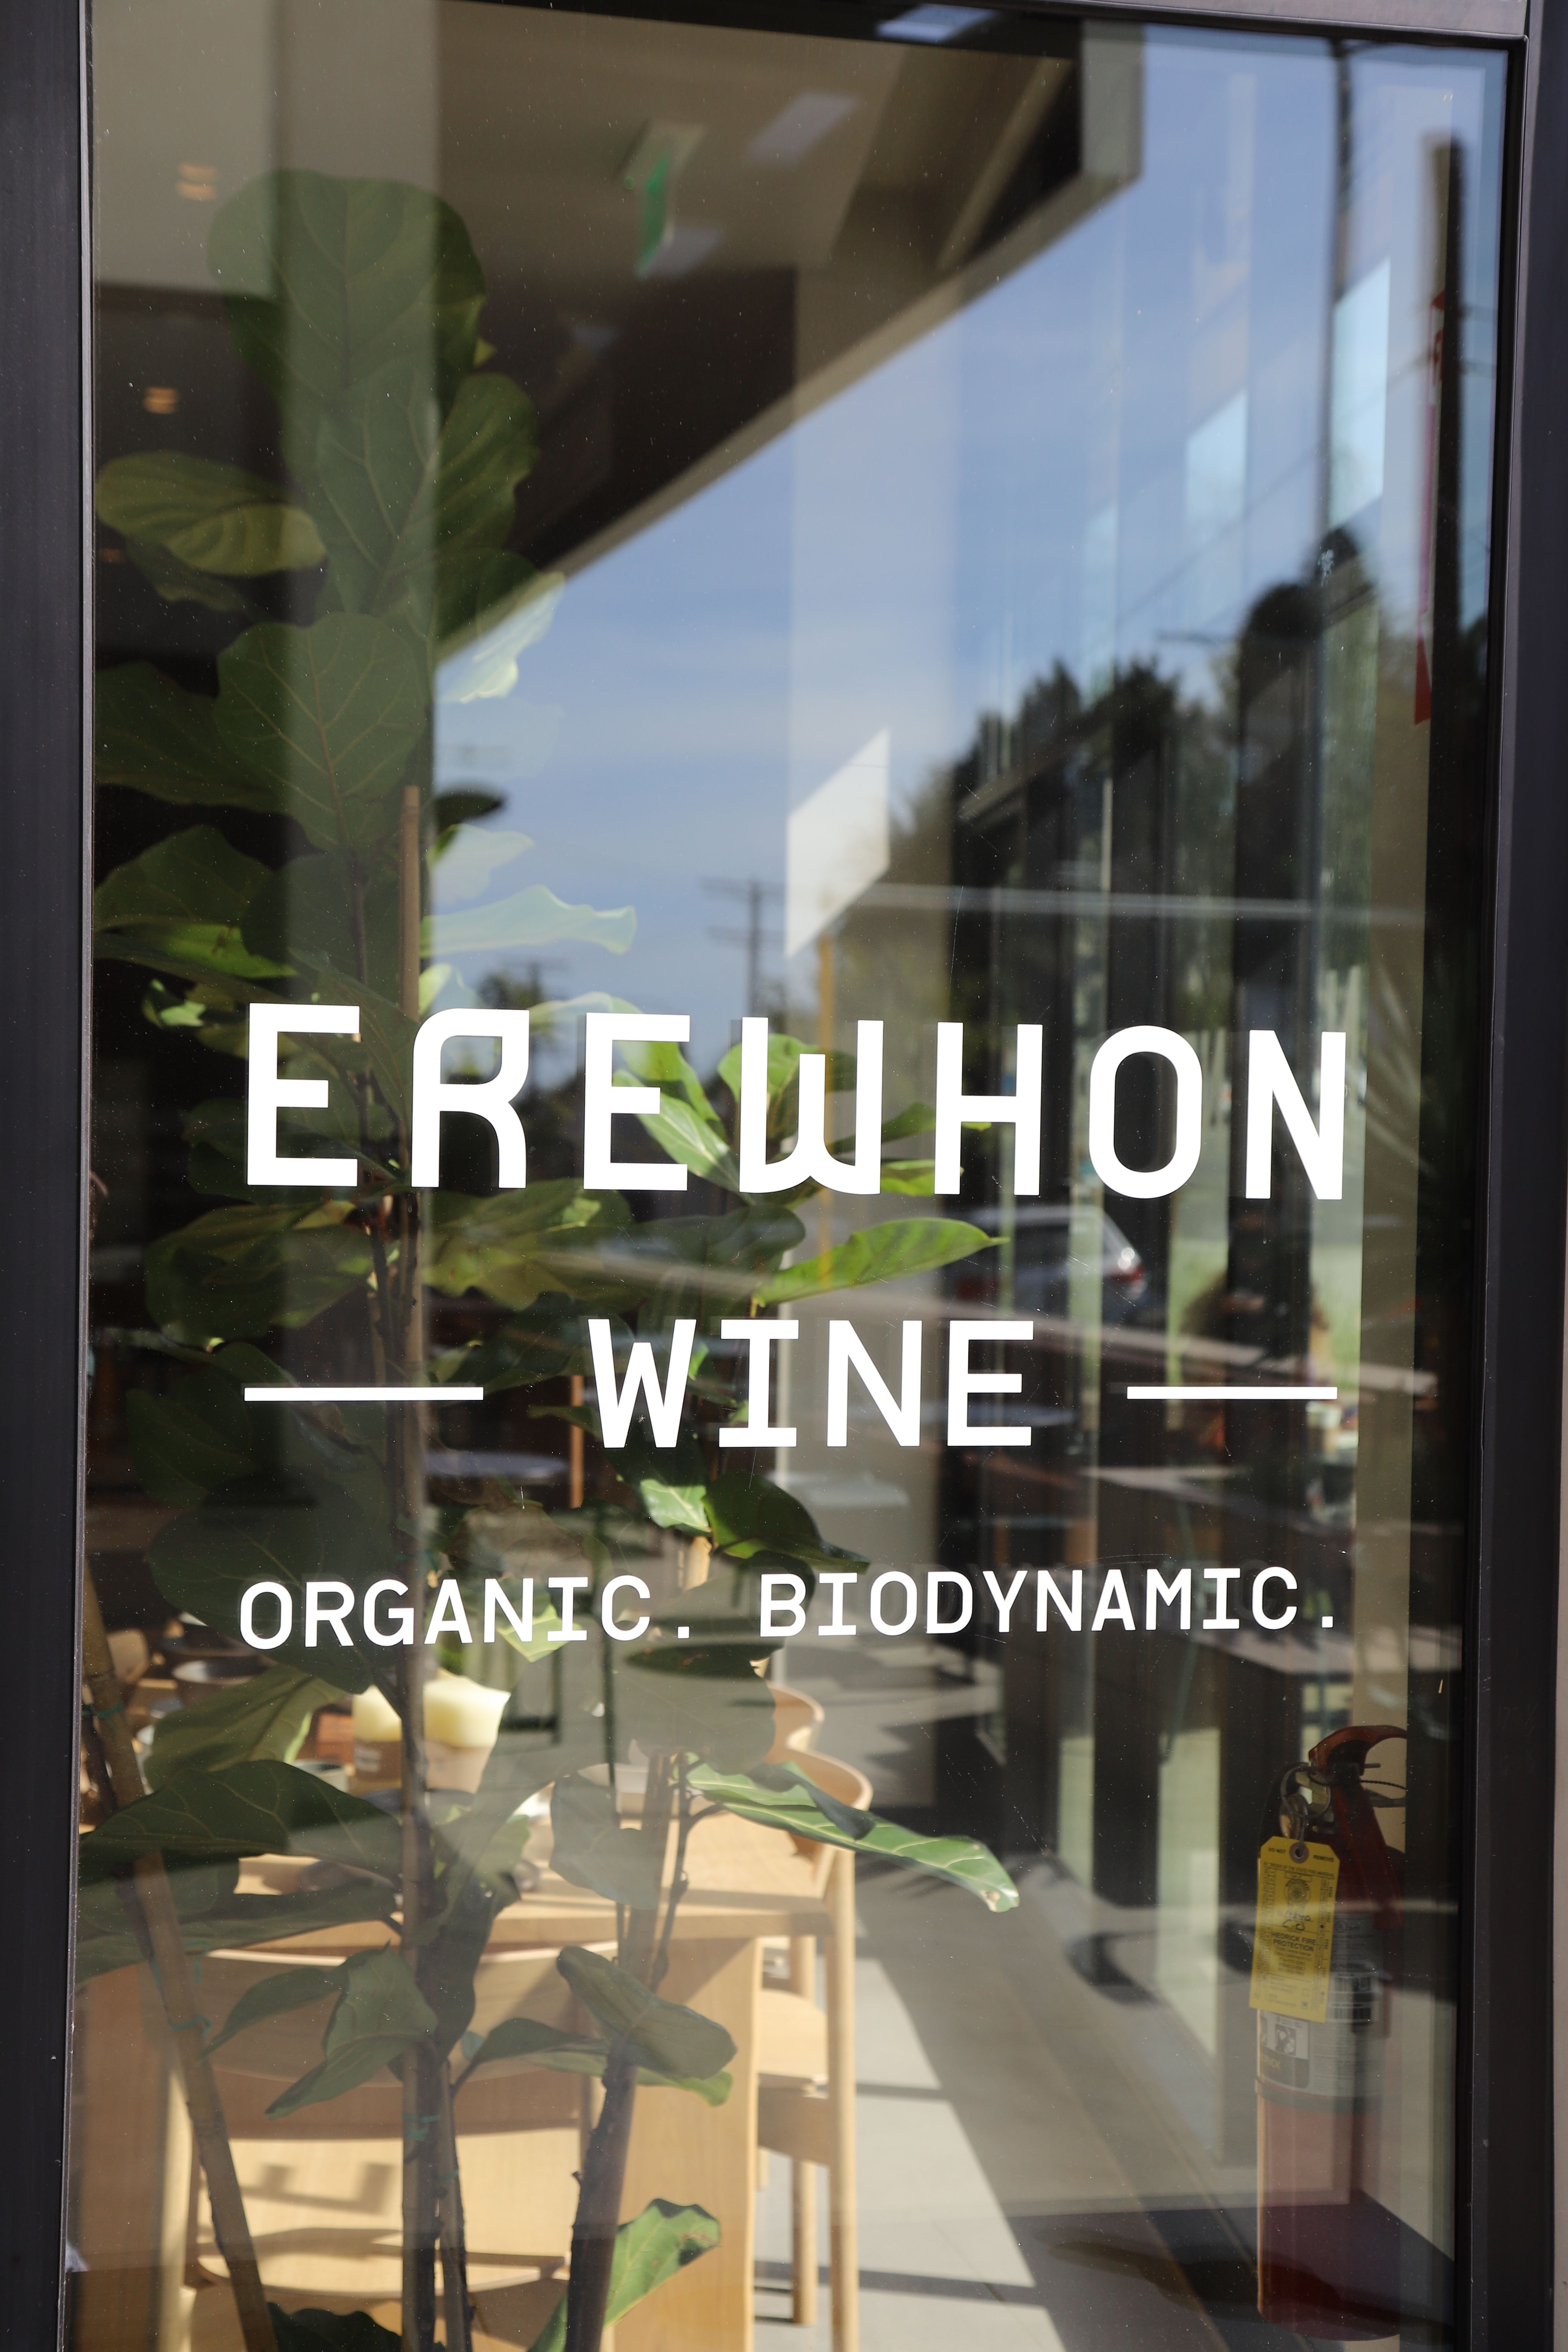 The Erewhon Wine Standard